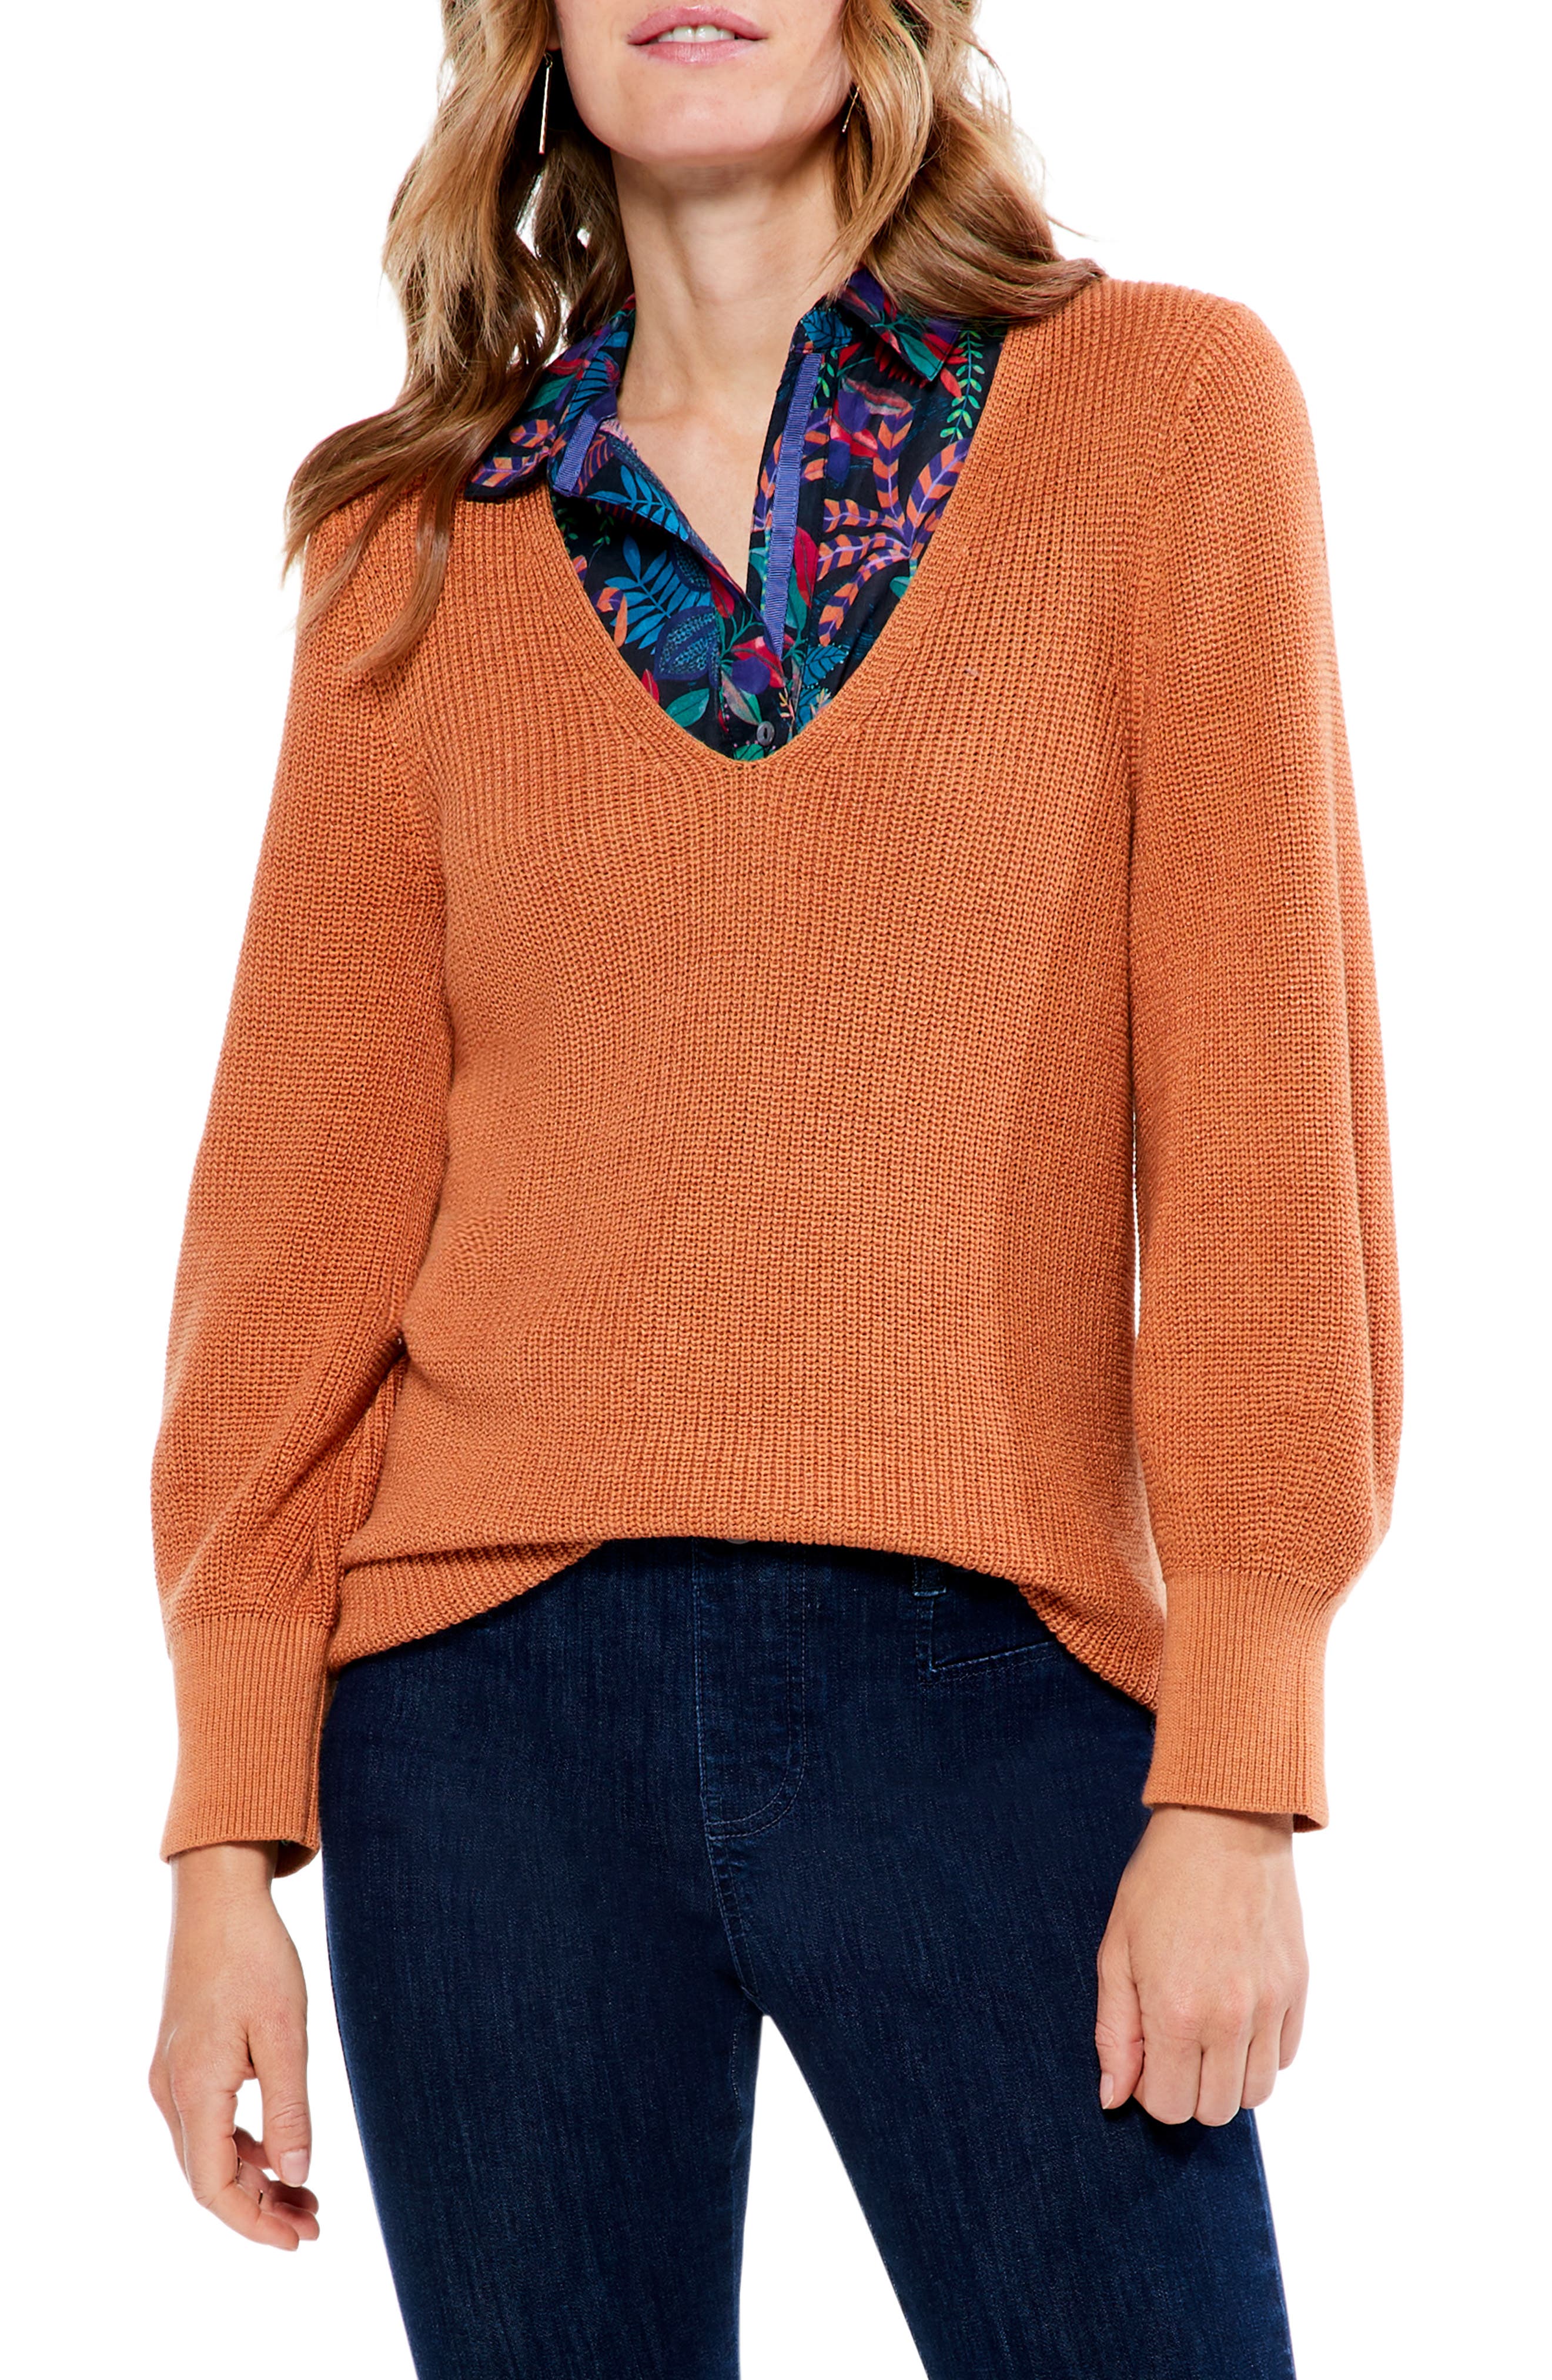 WOMEN FASHION Jumpers & Sweatshirts Jumper Knitted Orange/Black L discount 56% Punto Roma jumper 